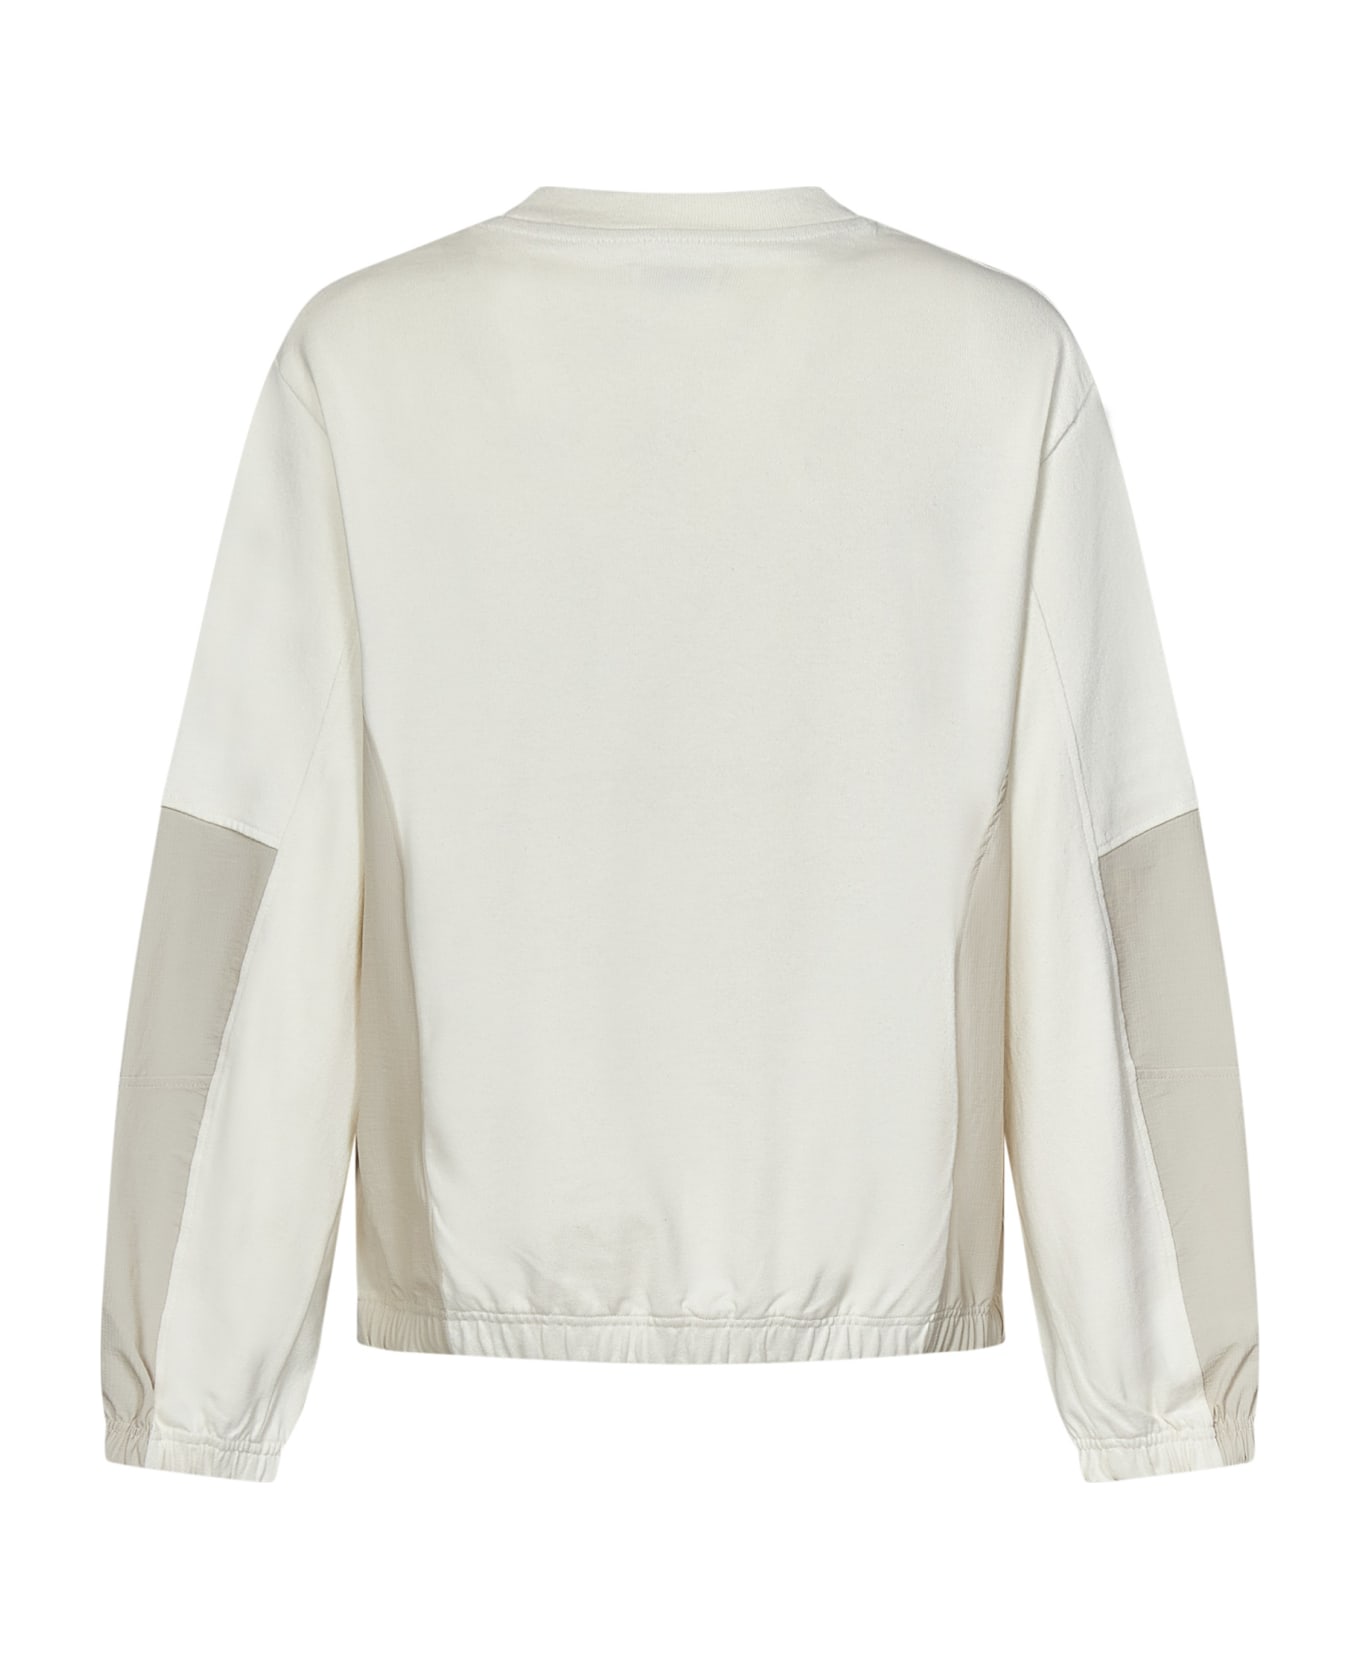 ROA Sweatshirt - White フリース